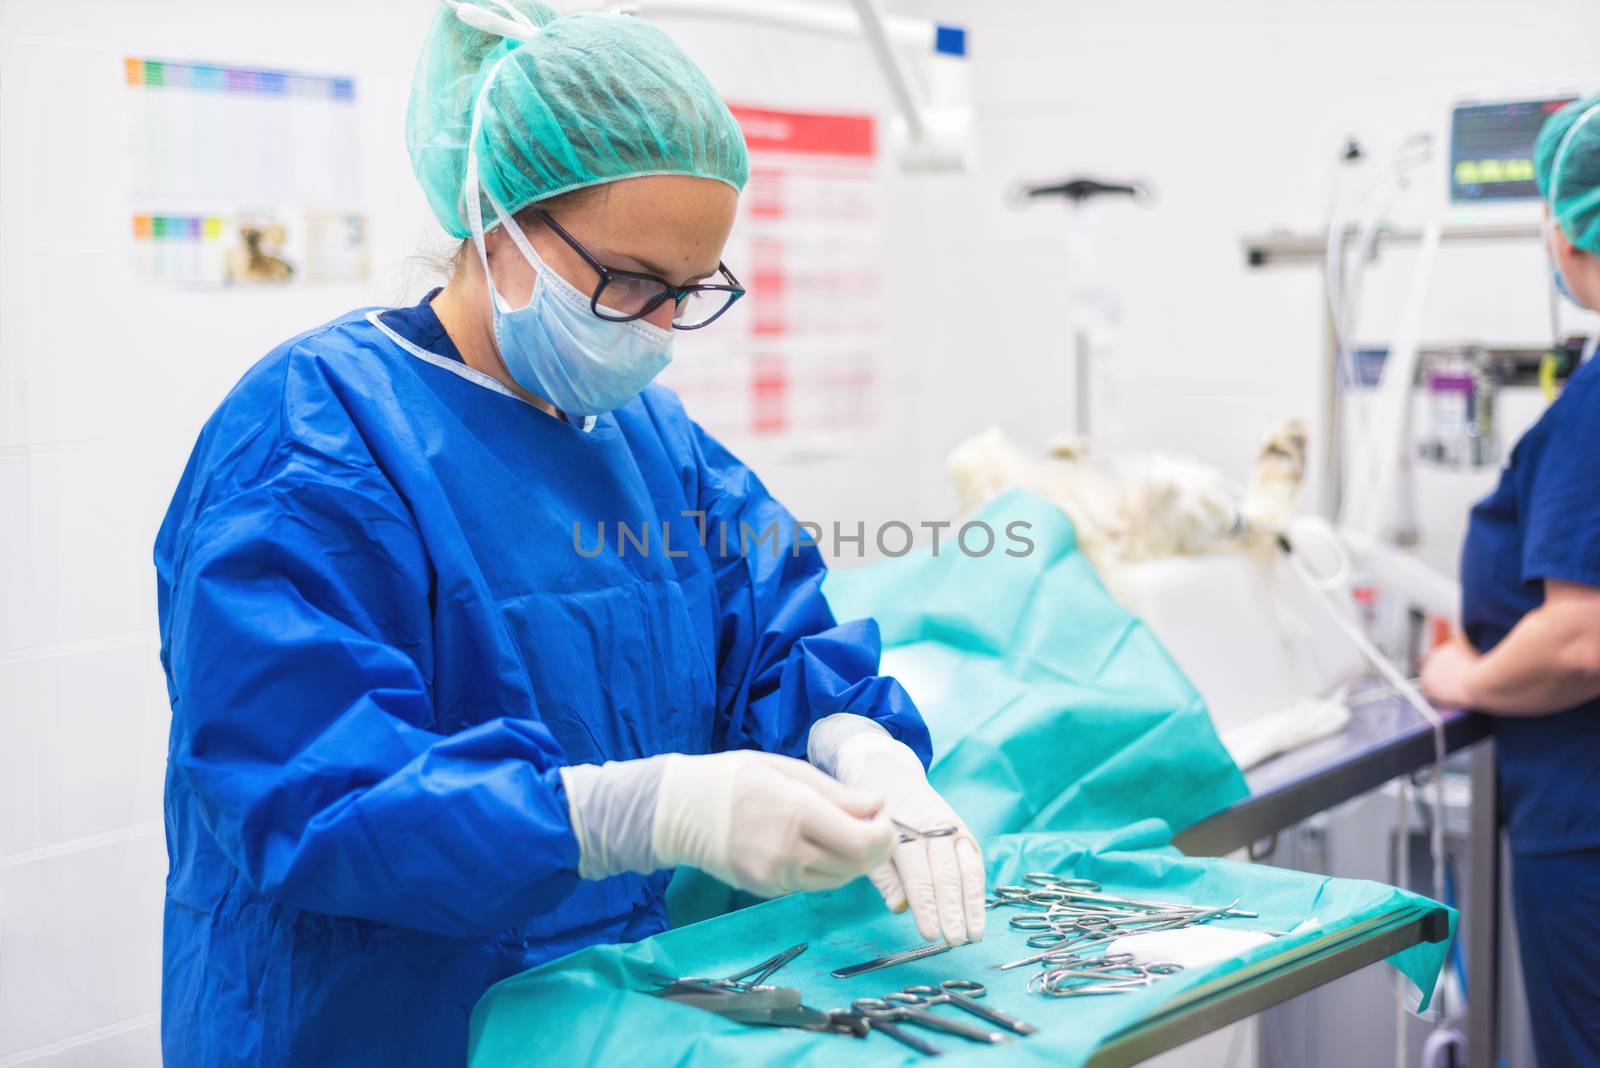 Veterinary surgeon with scalpel by HERRAEZ